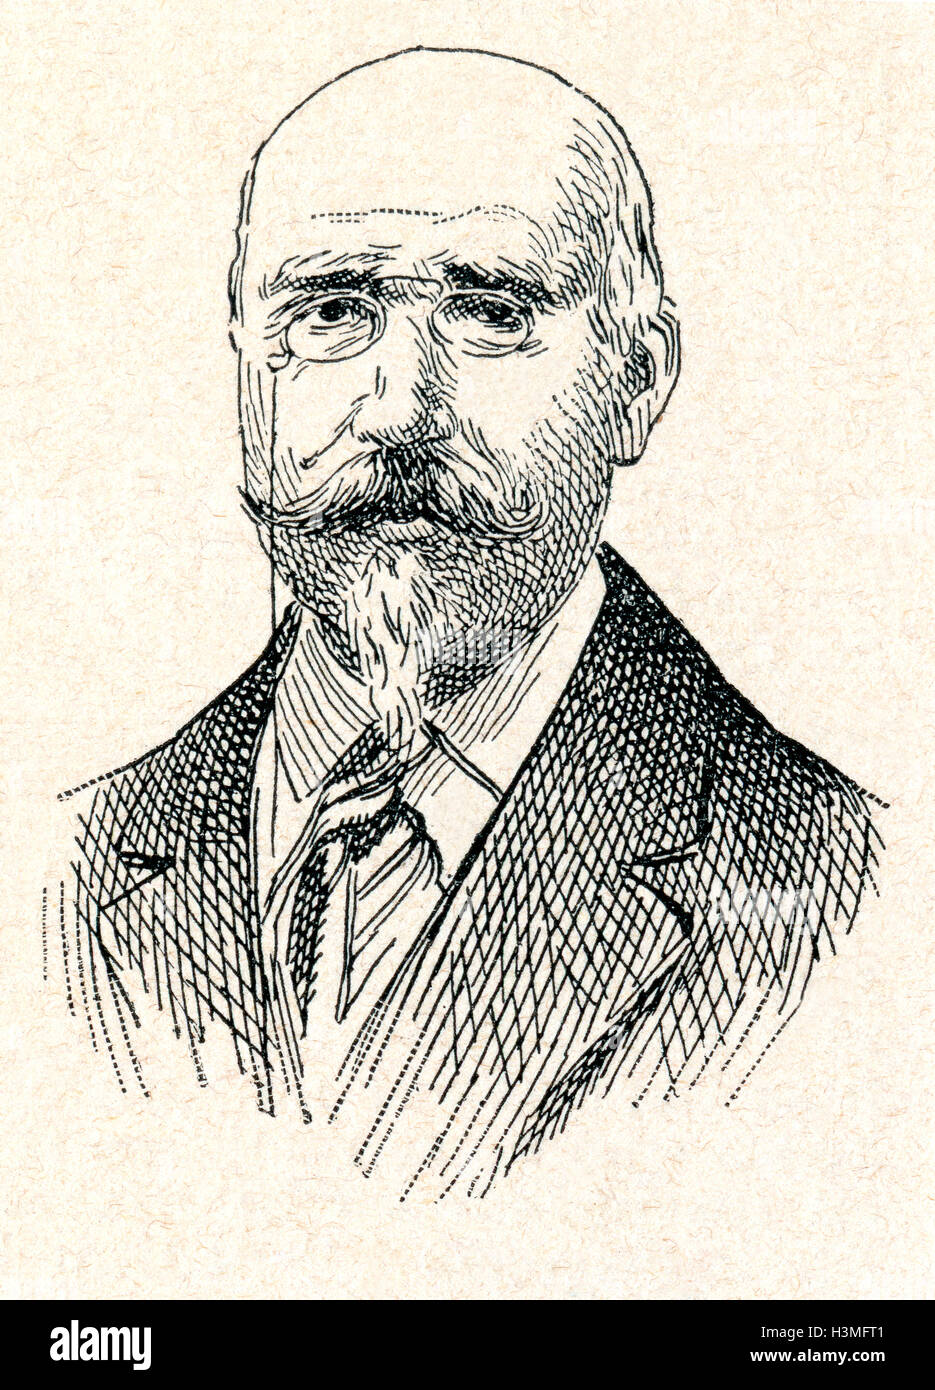 José Echegaray y Eizaguirre,  1832 – 1916. Spanish civil engineer, mathematician, statesman and dramatist. Winner of the 1904 Nobel Prize for Literature. Stock Photo